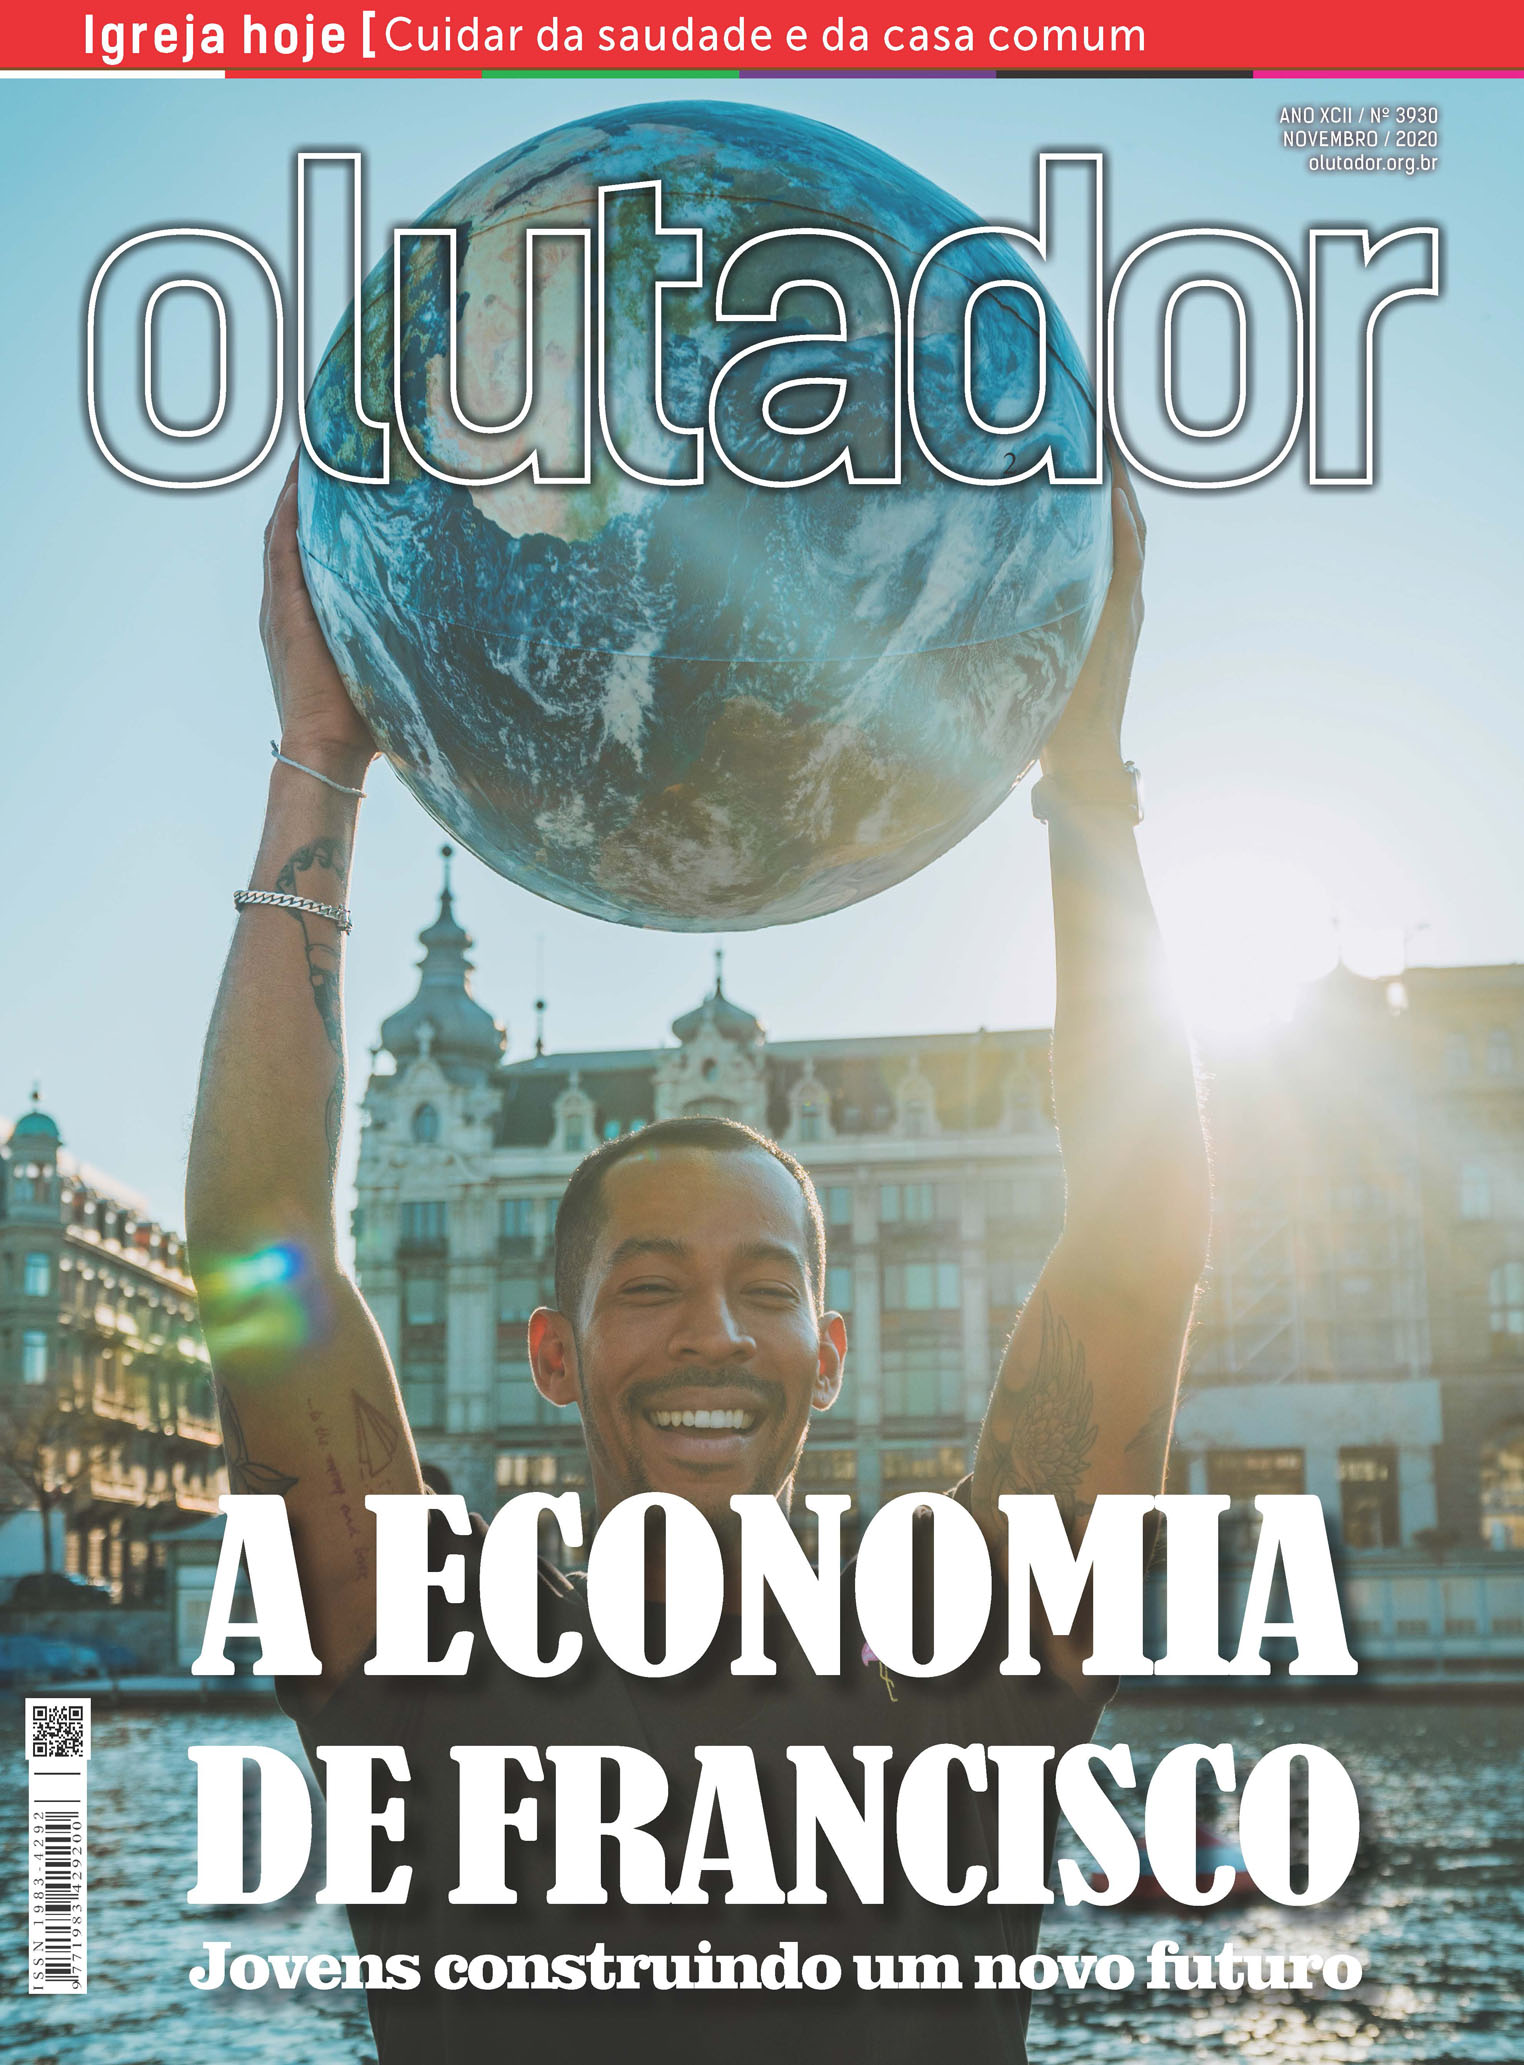 A Economia de Francisco